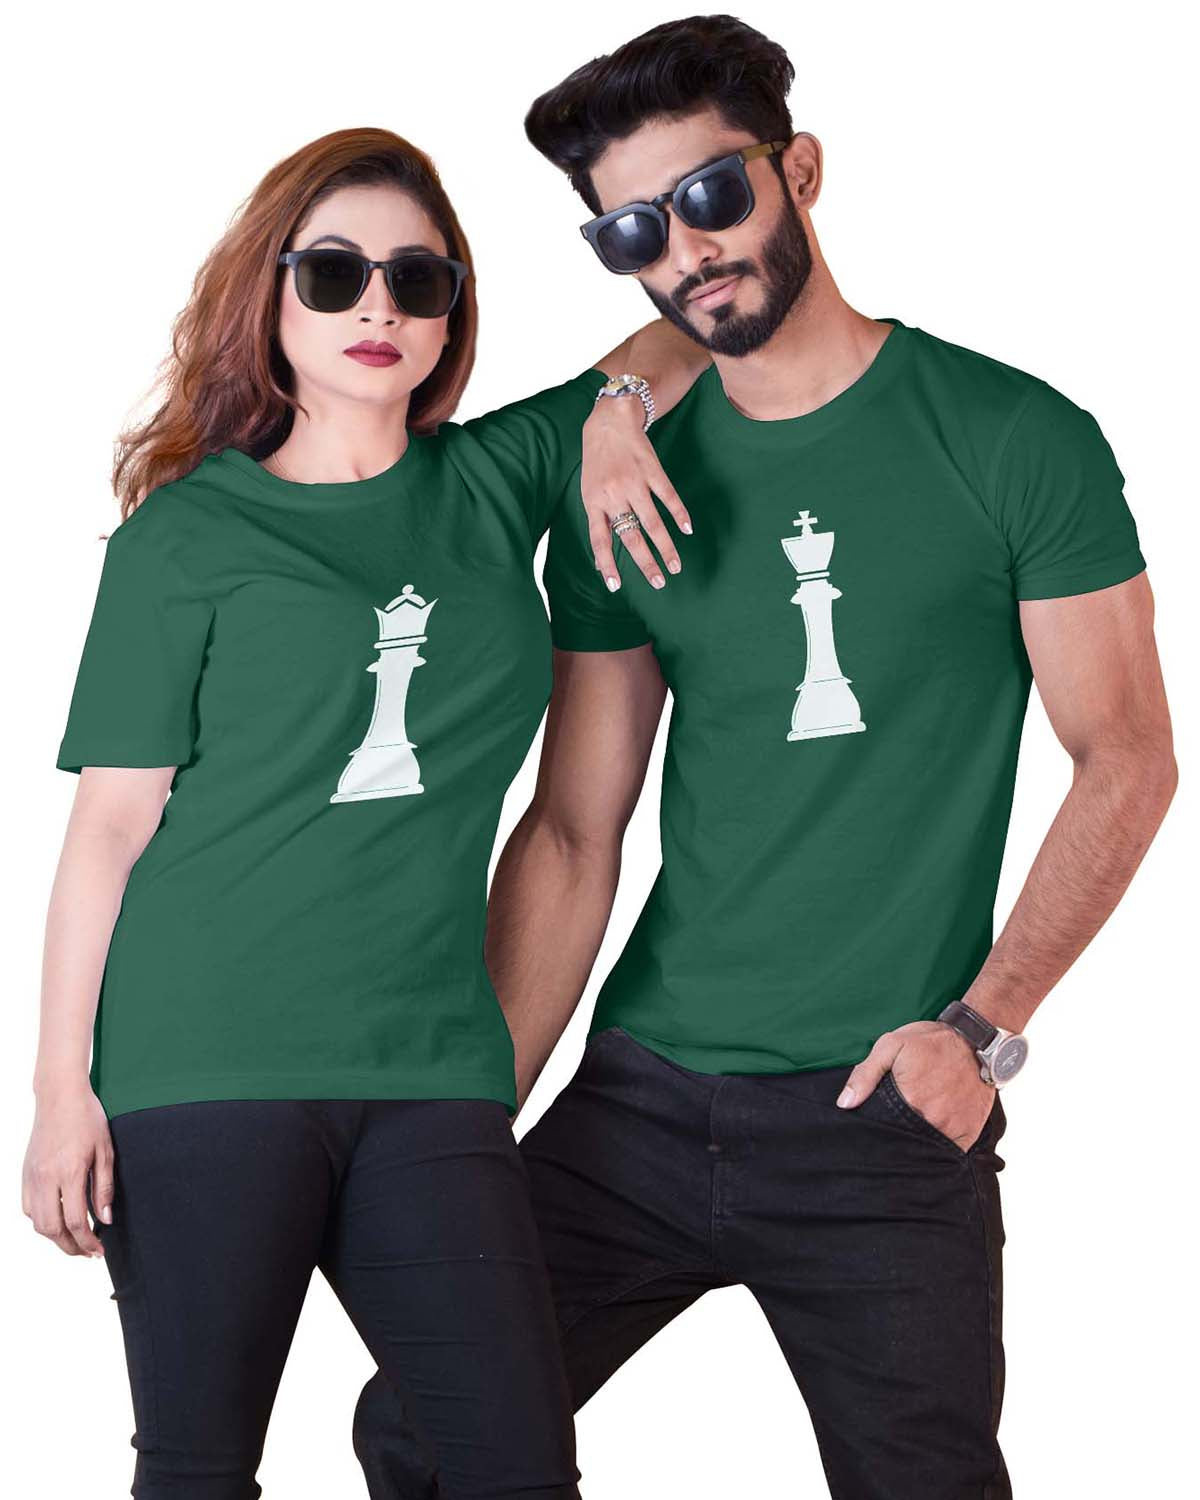 King & Queen Couple T-Shirt